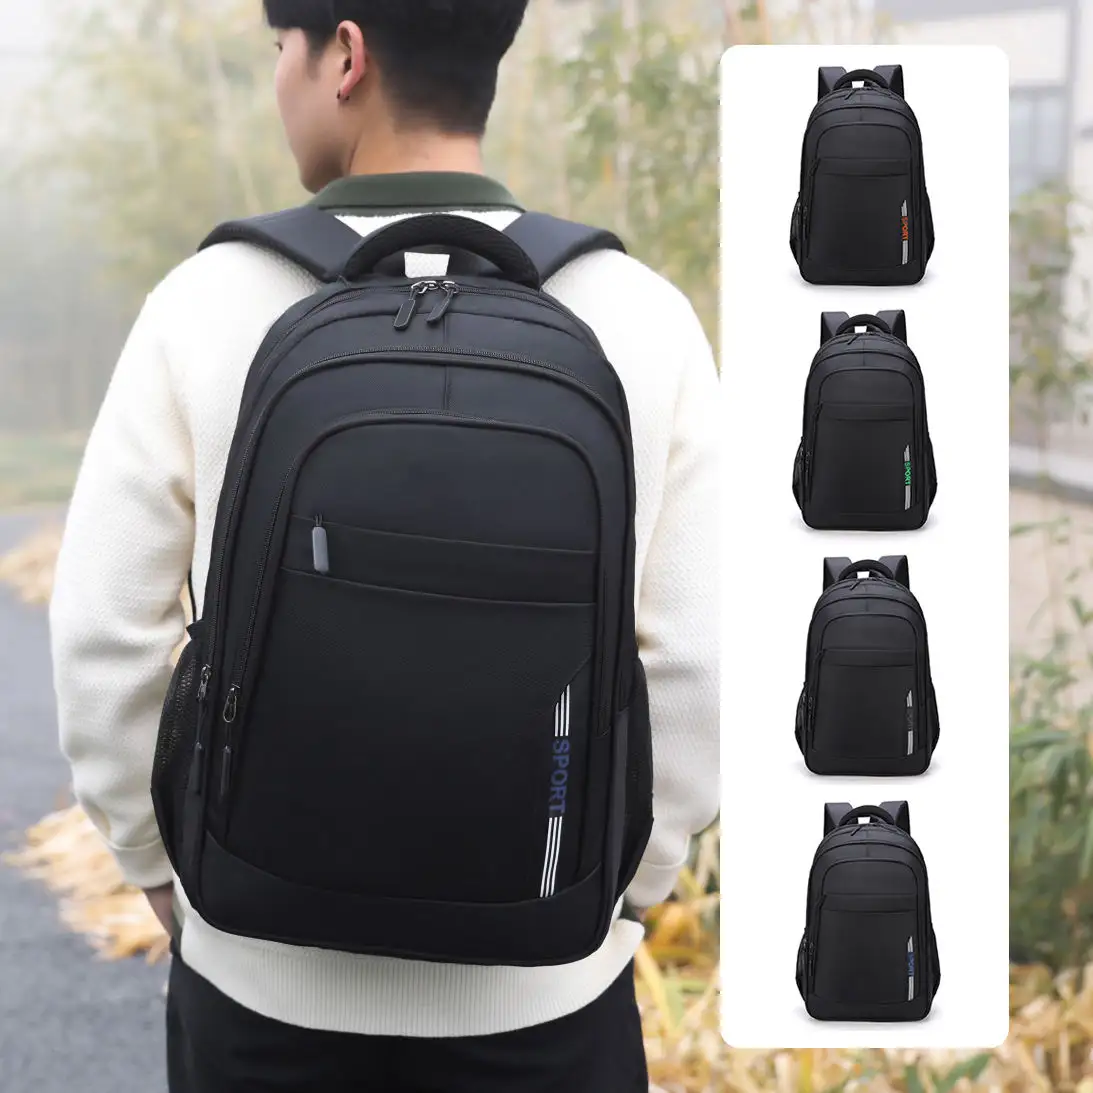 High Capacity 20 Inch Waterproof Laptop School Backpack Black Students Mochila Bags   Covers